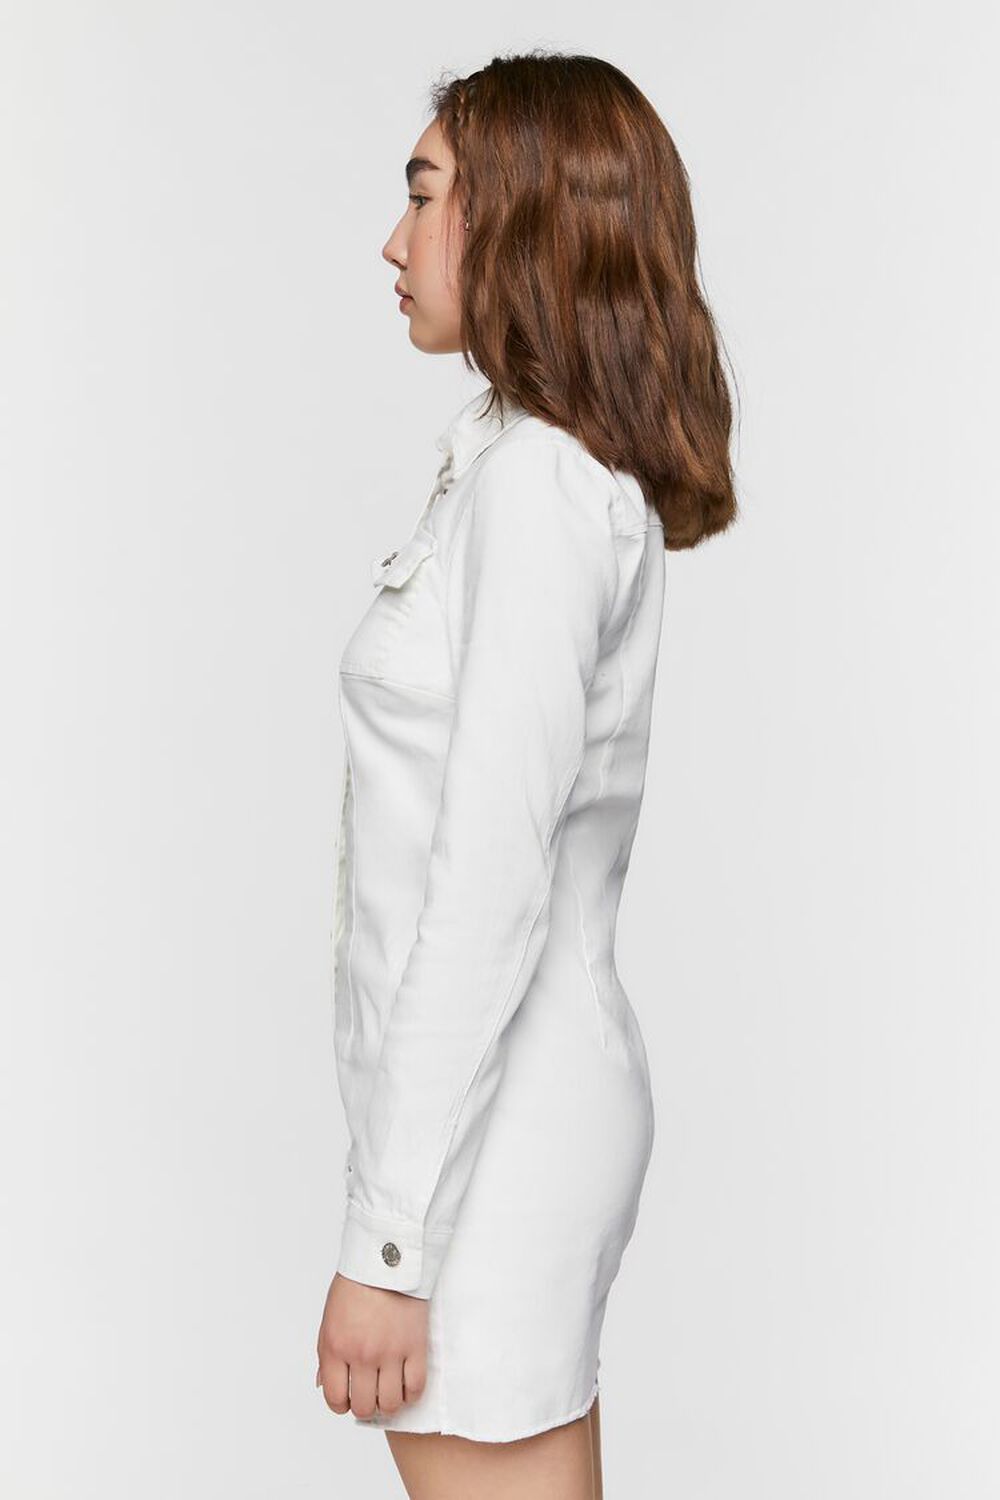 WHITE Distressed Denim Mini Shirt Dress, image 2